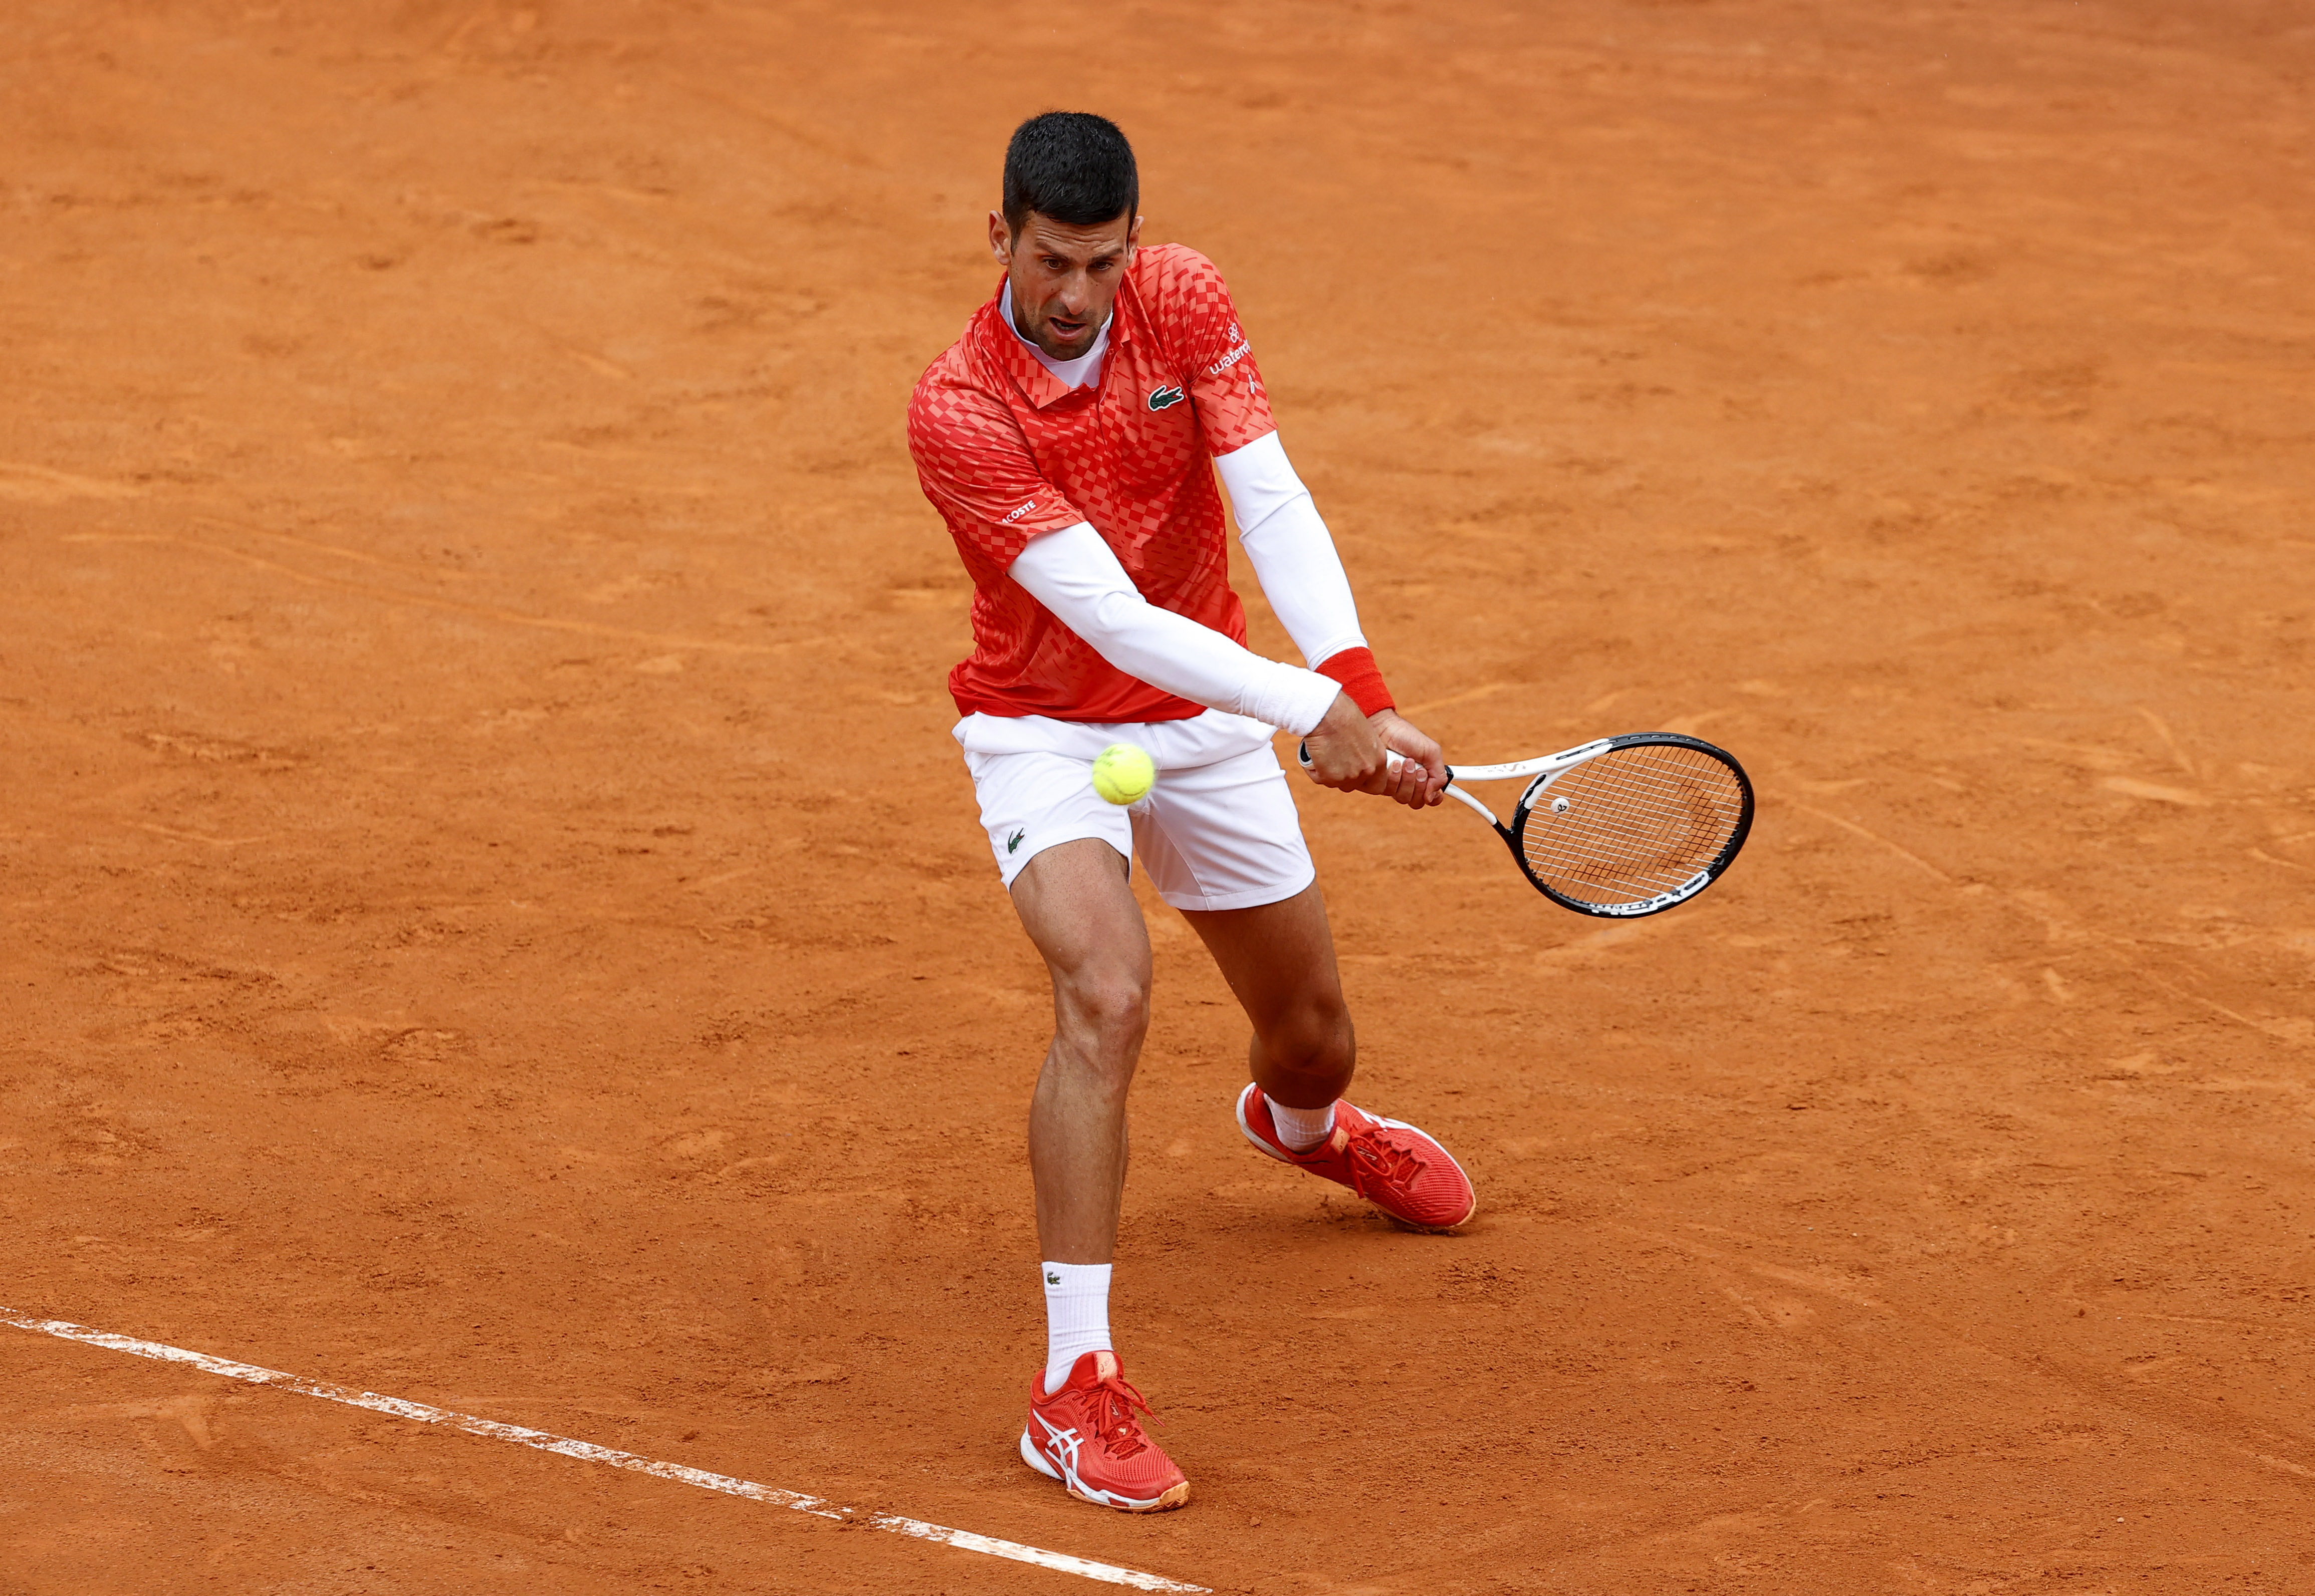 Rune upsets Djokovic to storm into Rome semi-finals, injured Swiatek retires Reuters